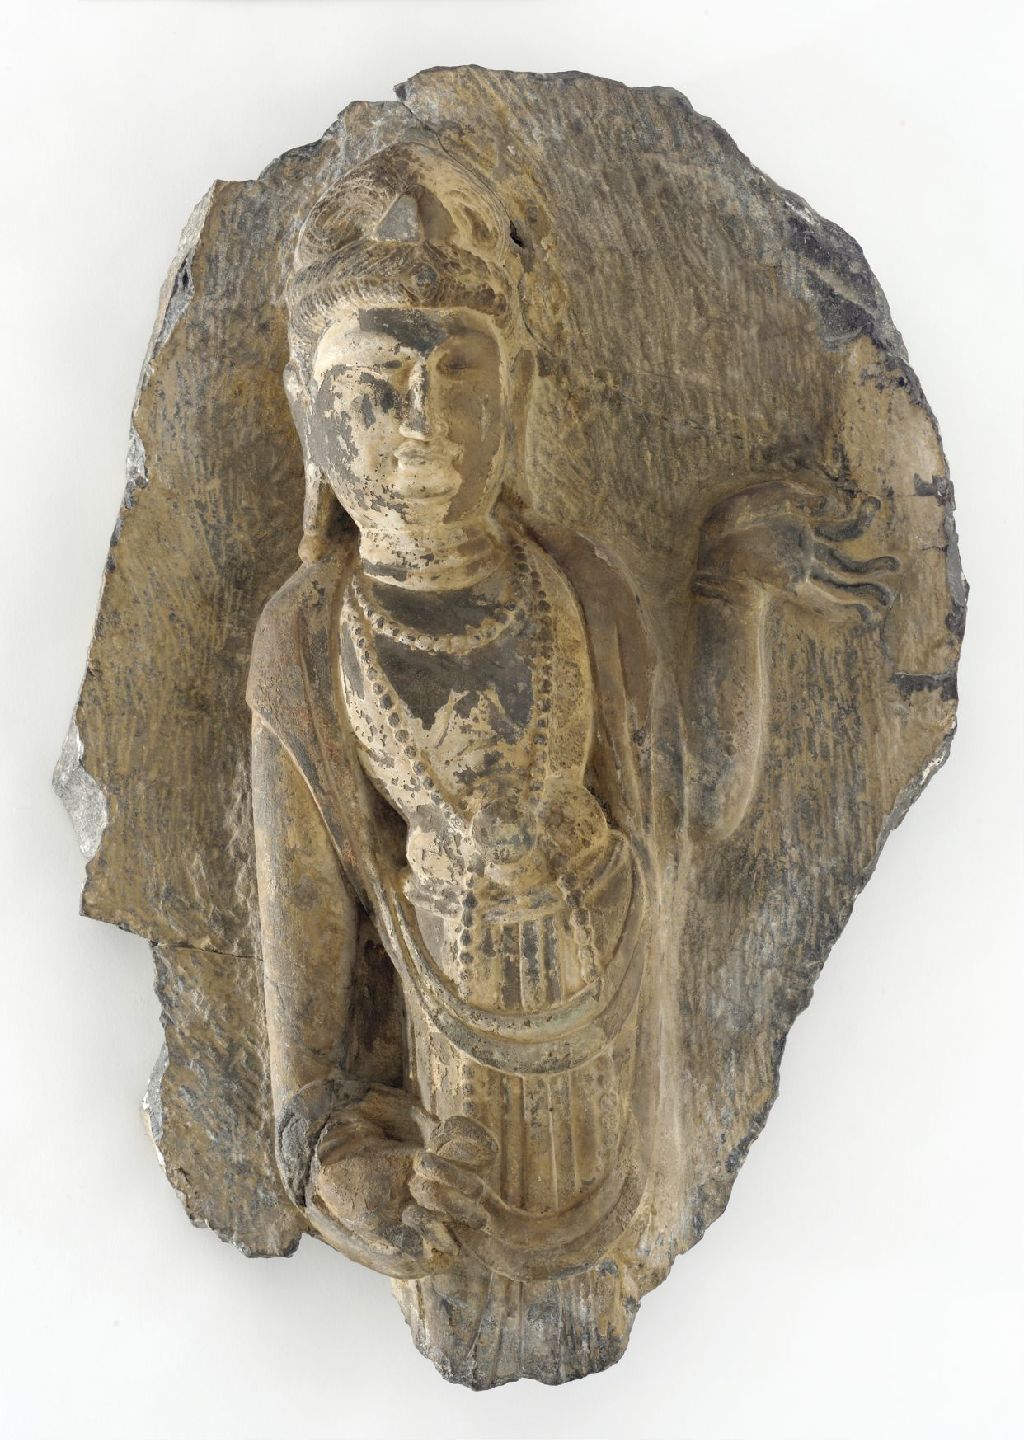 Miniature of Bodhisattva Avalokiteshvara (Guanyin)